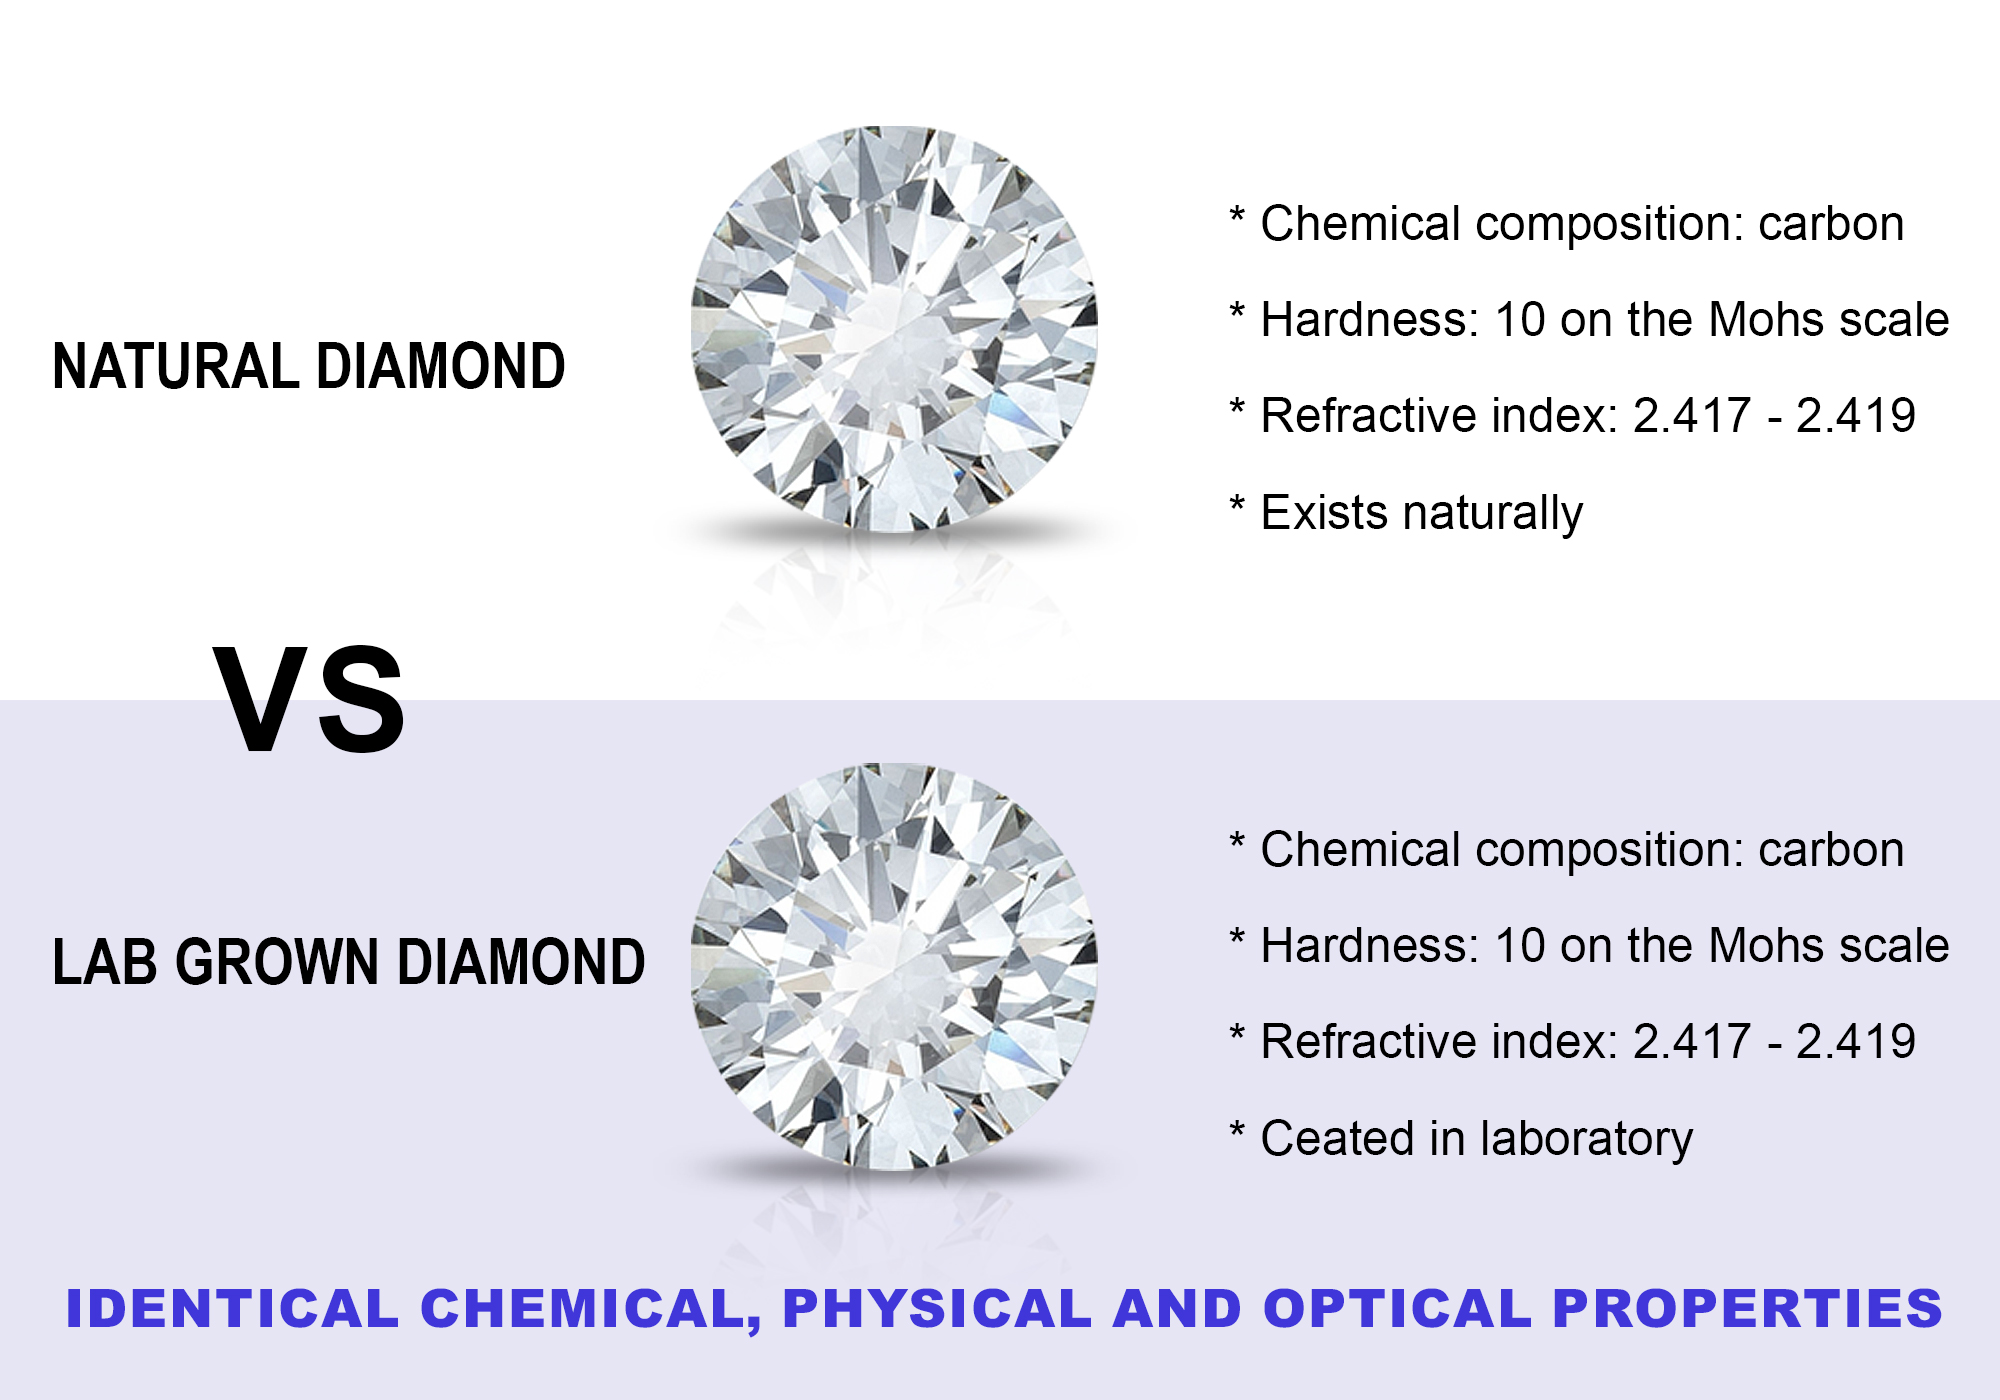 Can lab diamond last as long as natural diamonds